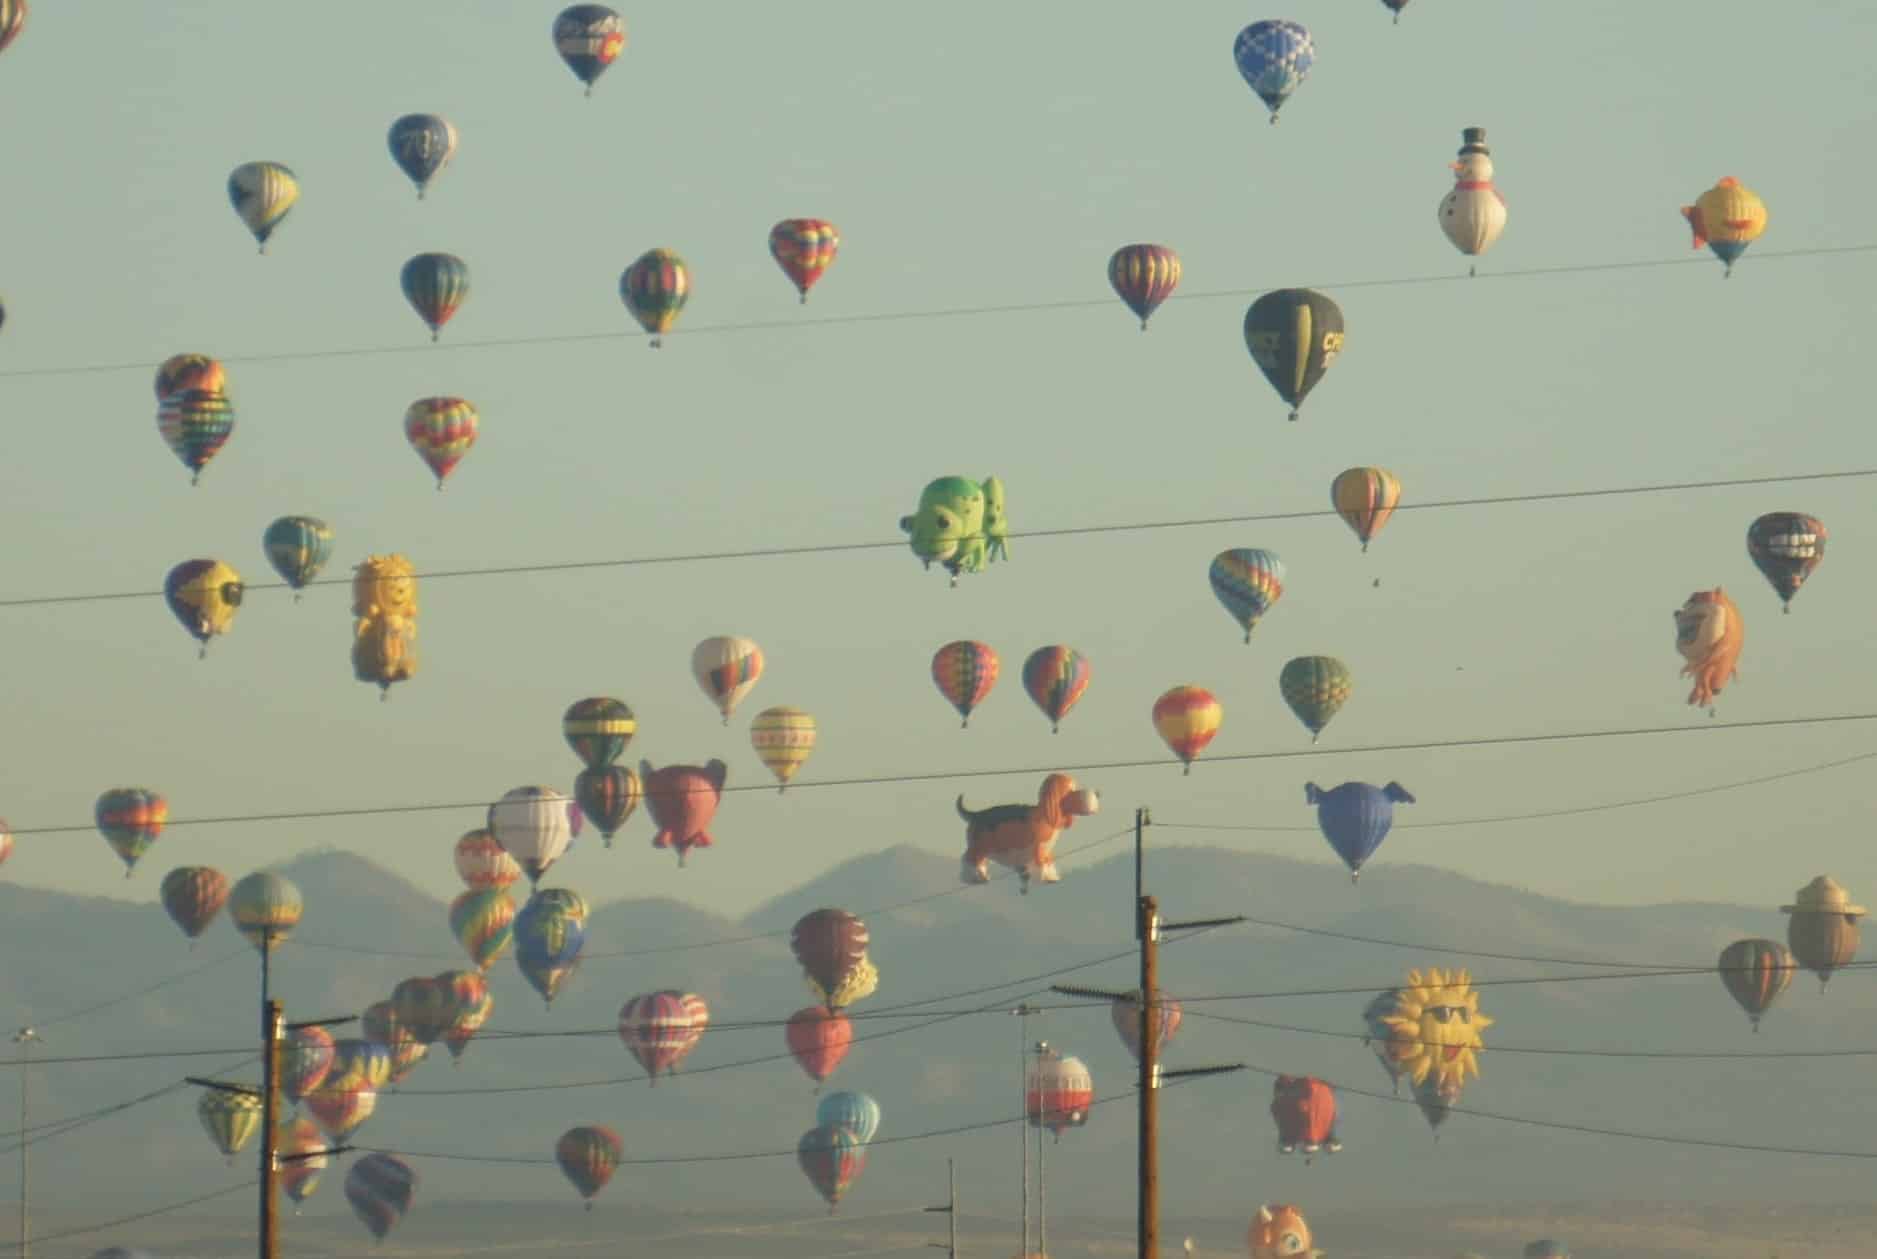 Balloons fill the sky